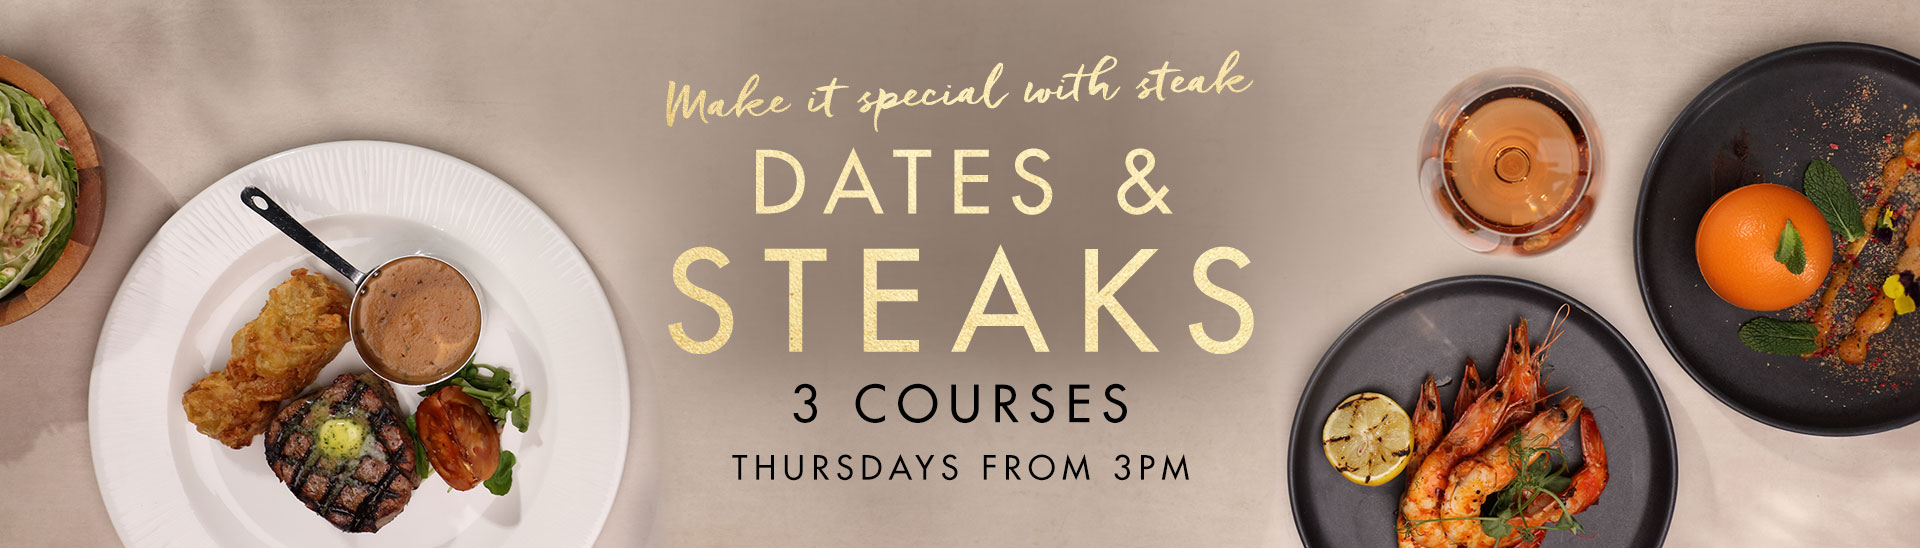 Dates & Steaks at Miller & Carter Gloucester